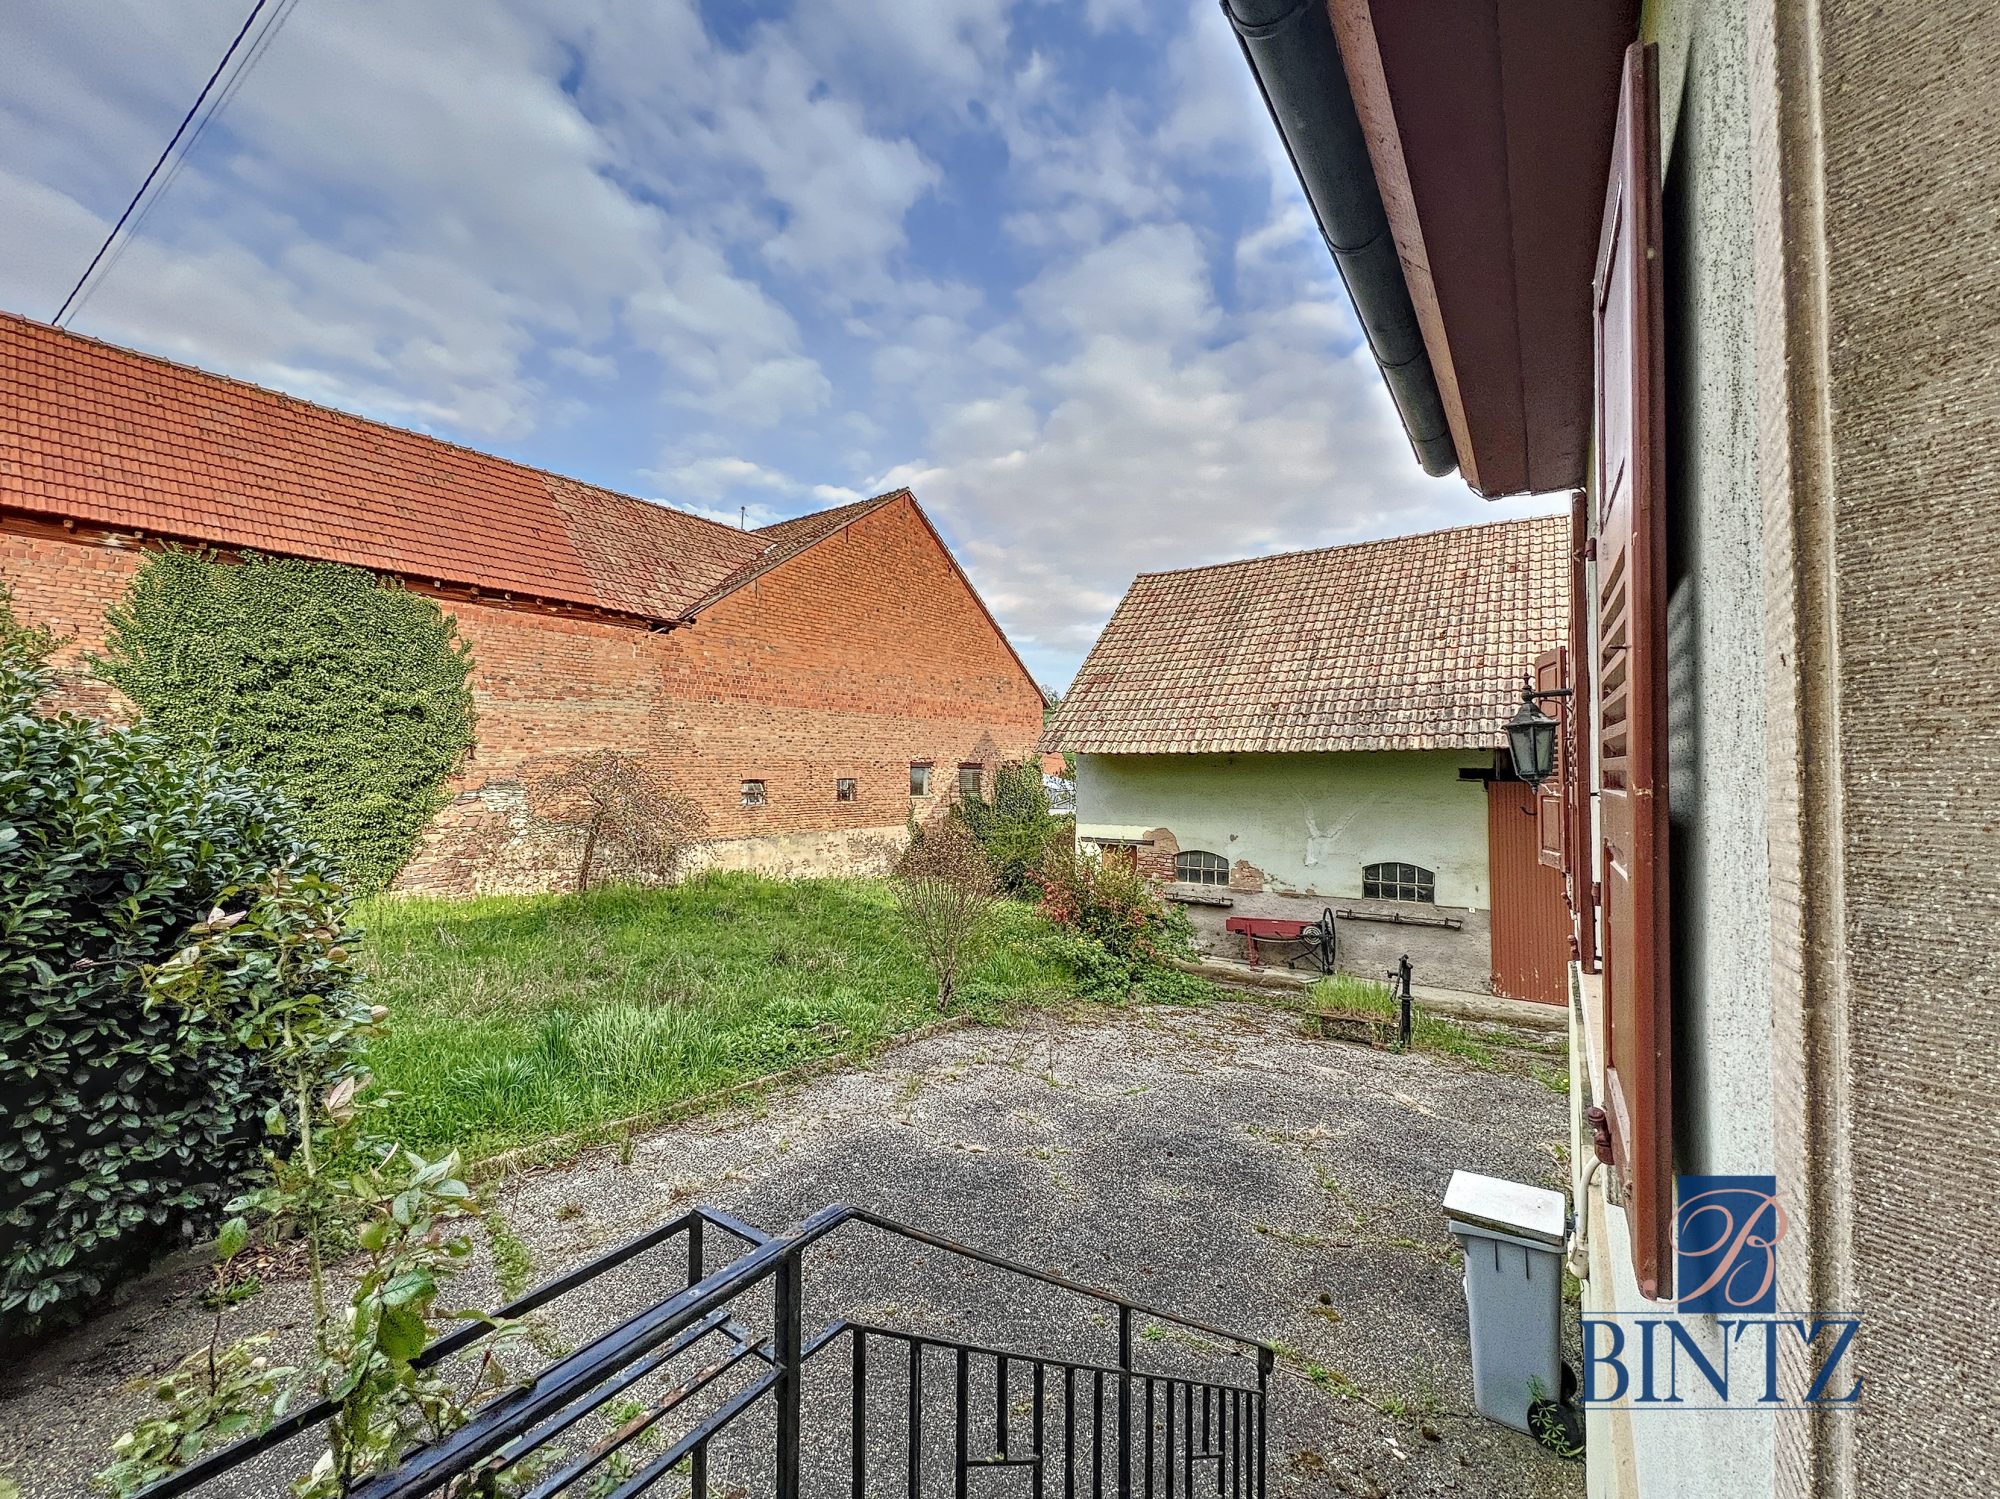 Maison grange & terrain - maison à vendre Strasbourg - Bintz Immobilier - 6